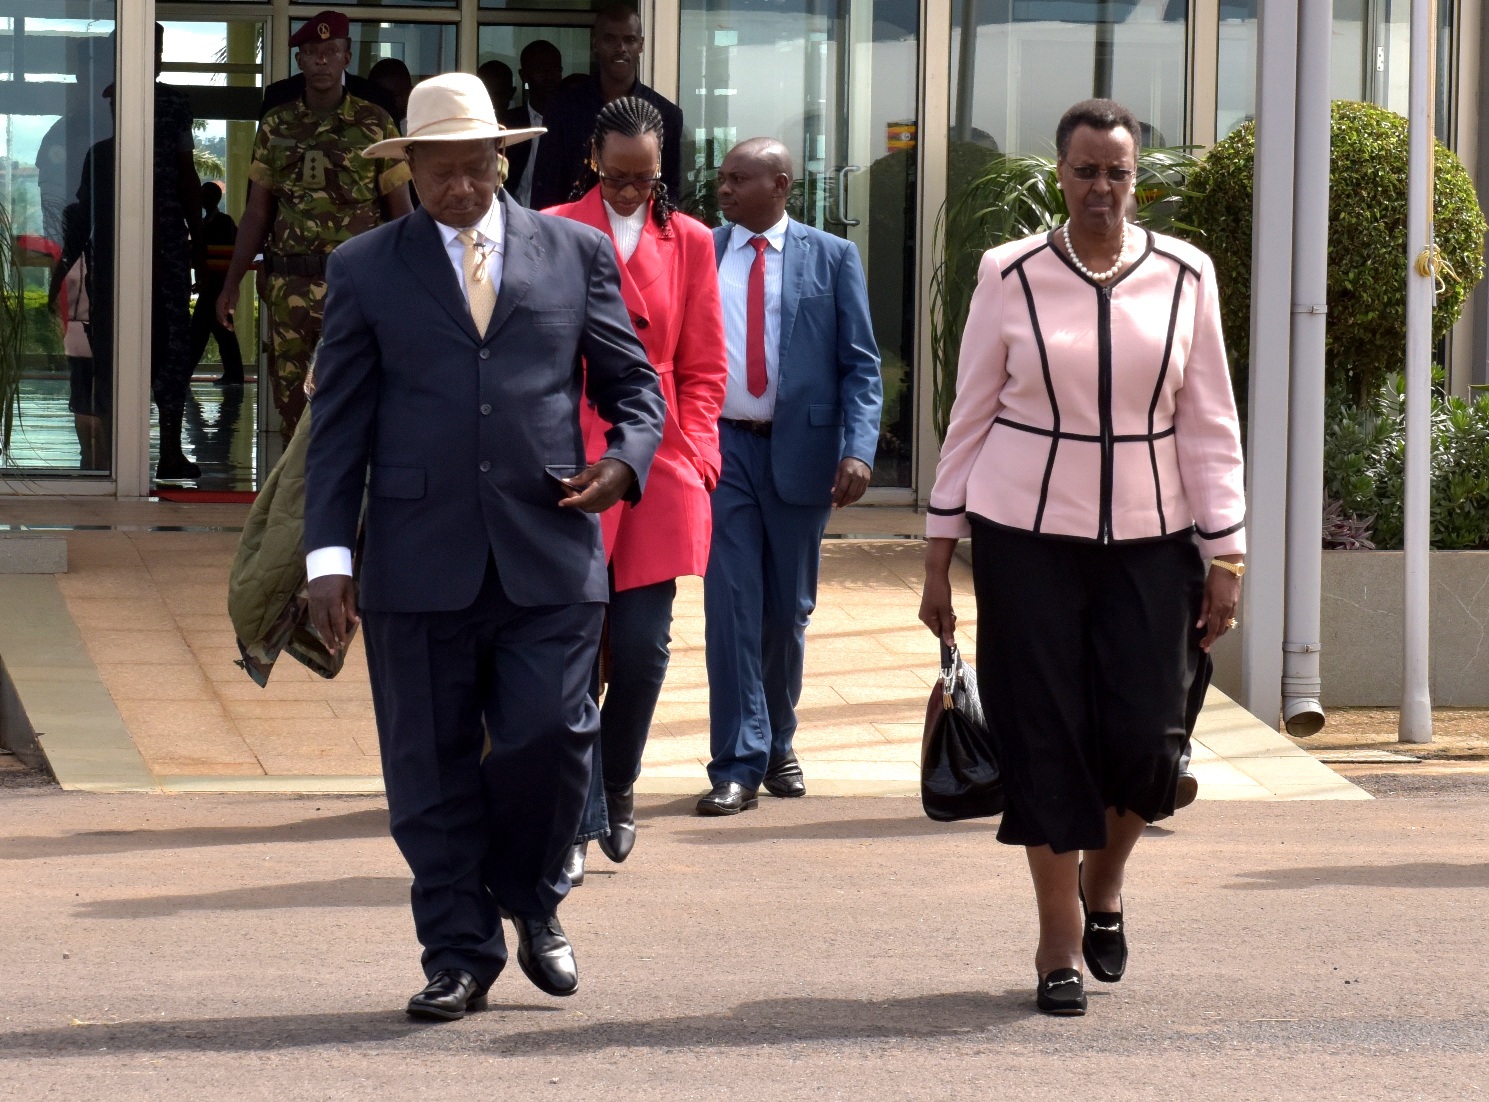 President Museveni Leaves for London Somali Conference